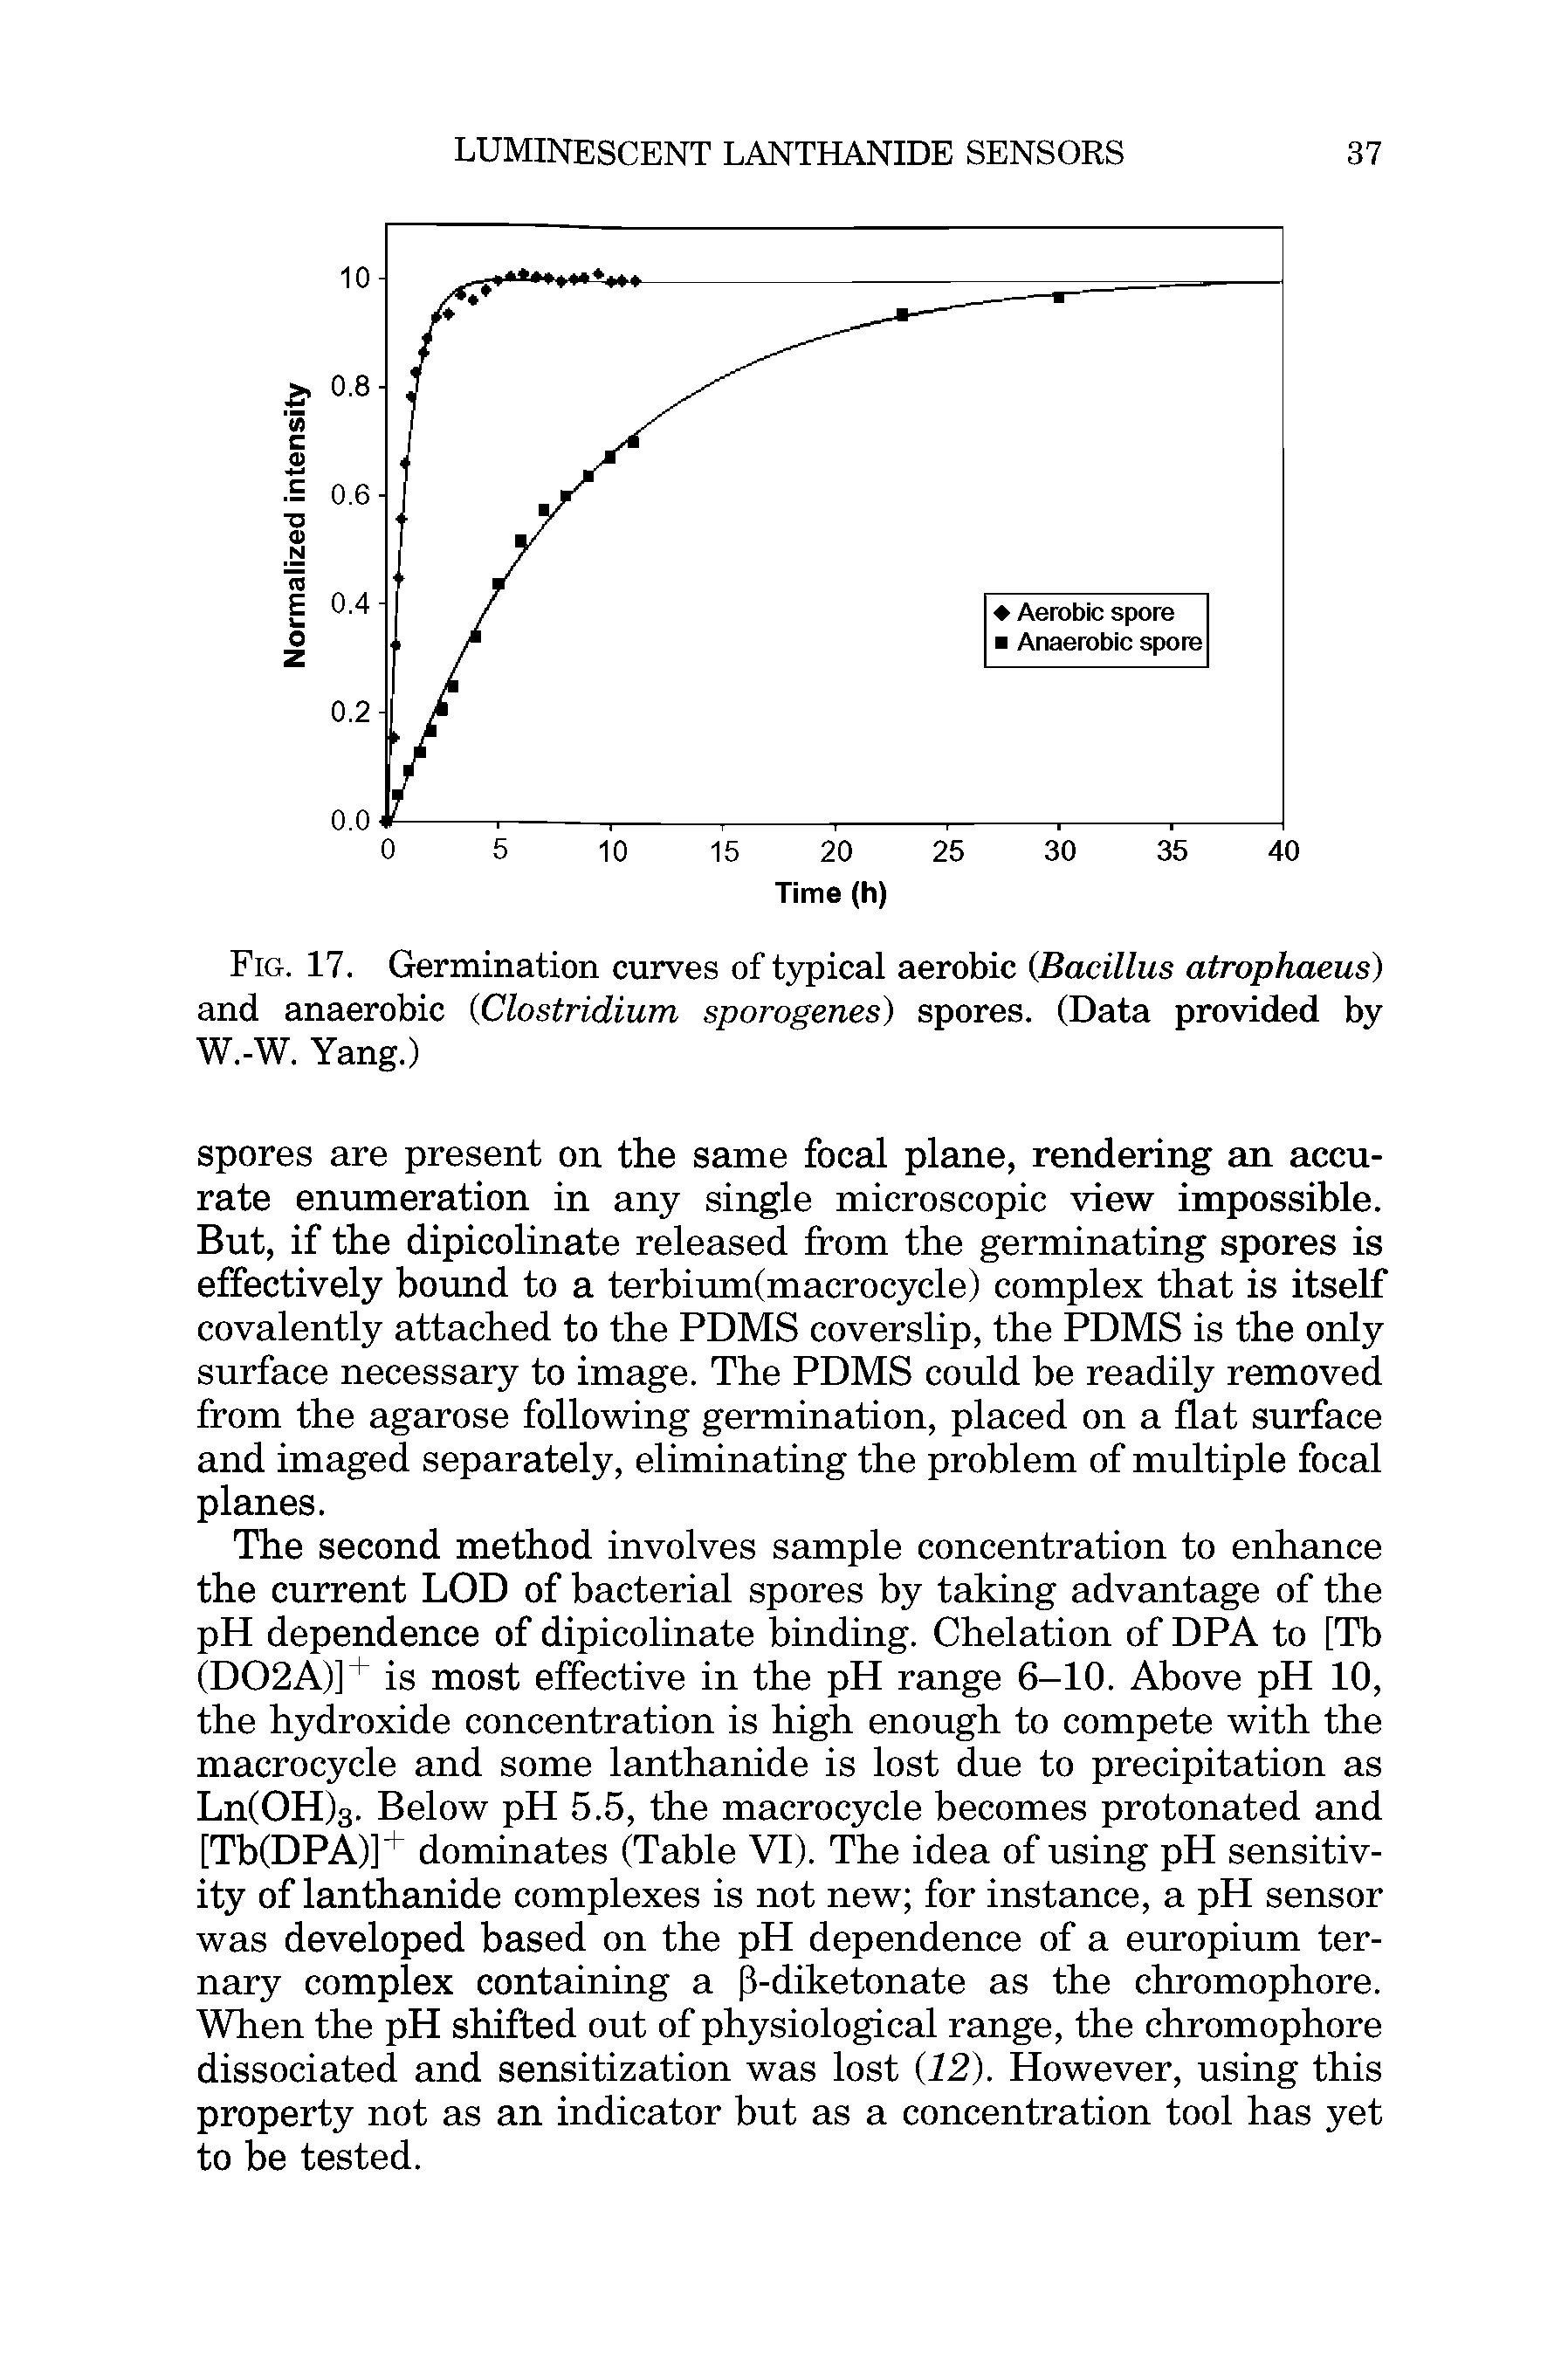 Fig. 17. Germination curves of typical aerobic (Bacillus atrophaeus) and anaerobic (Clostridium sporogenes) spores. (Data provided by W.-W. Yang.)...